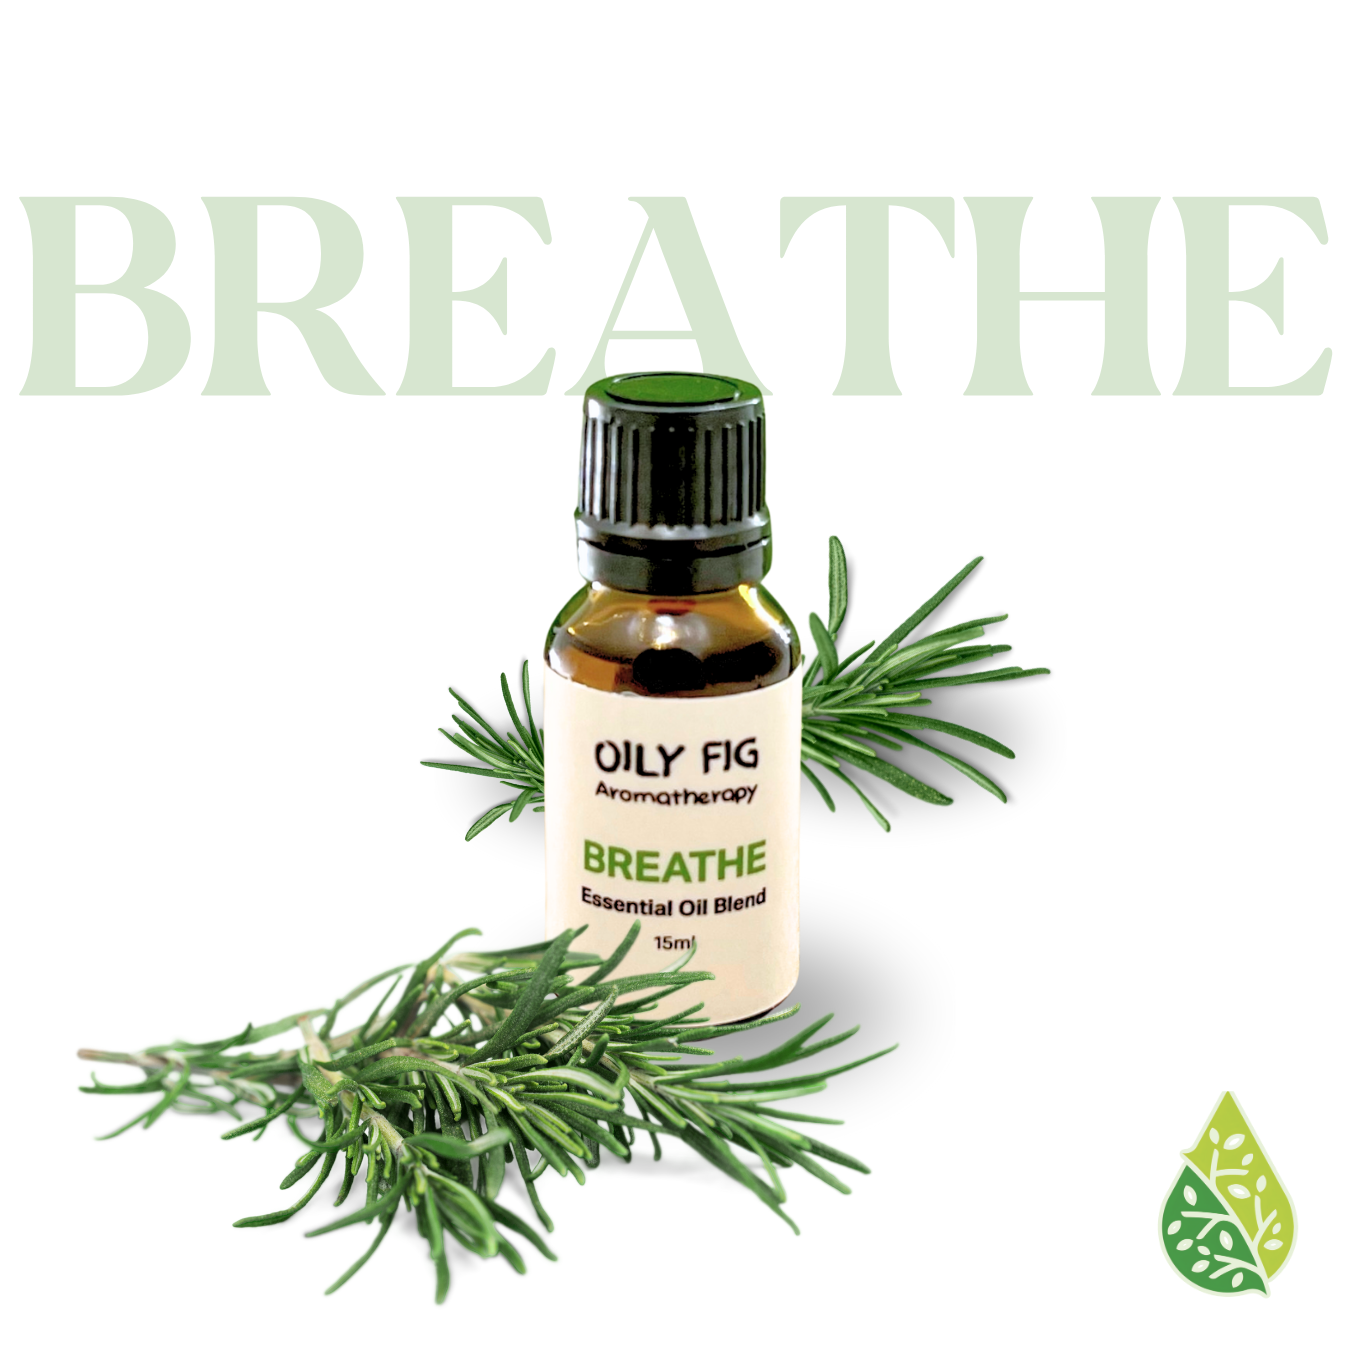 BREATHE essential oil blend